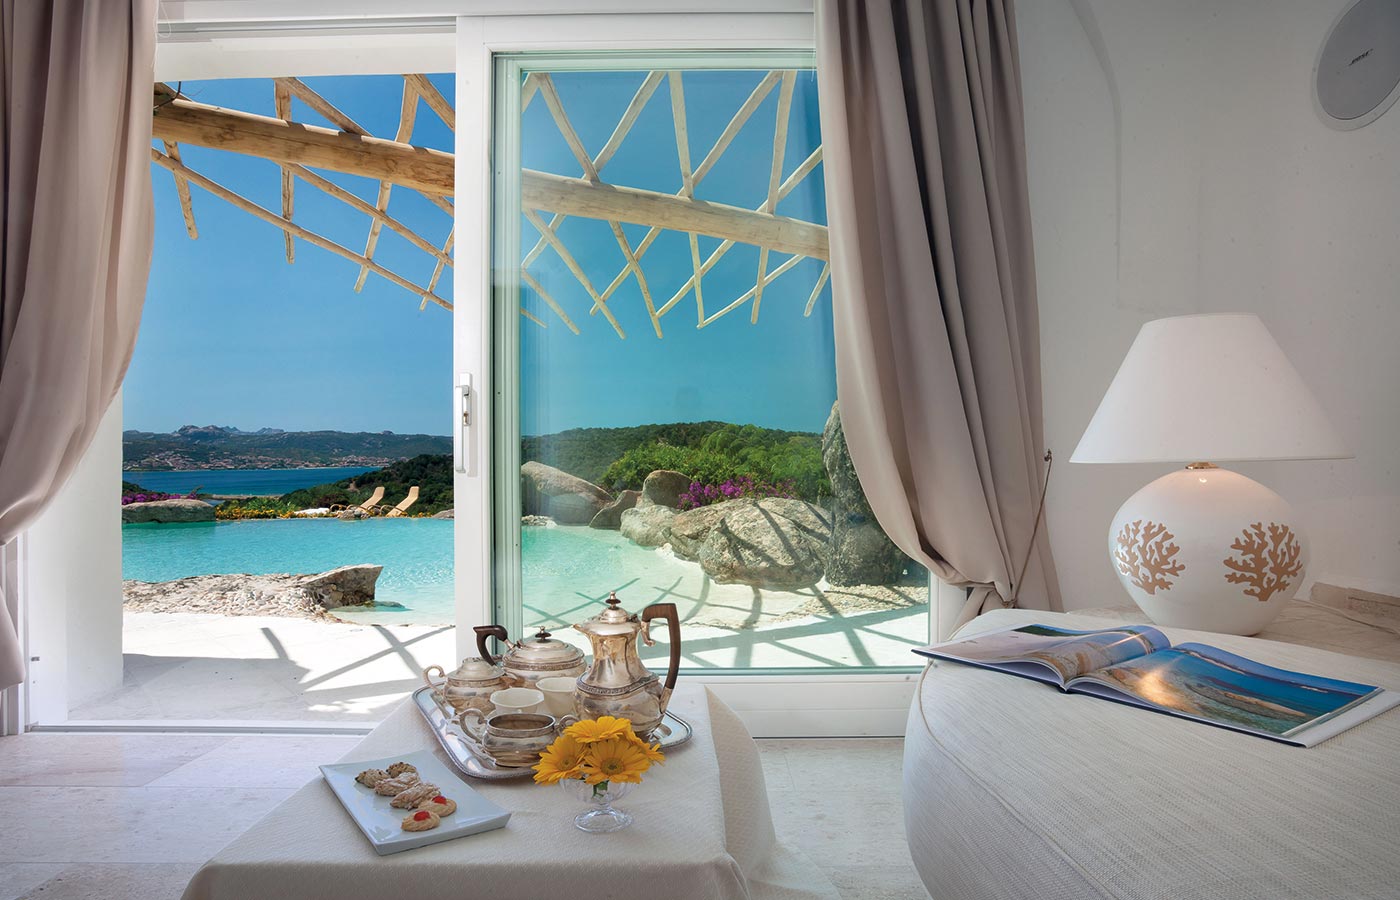 Dream rooms at our 4-star hotel in Costa Smeralda